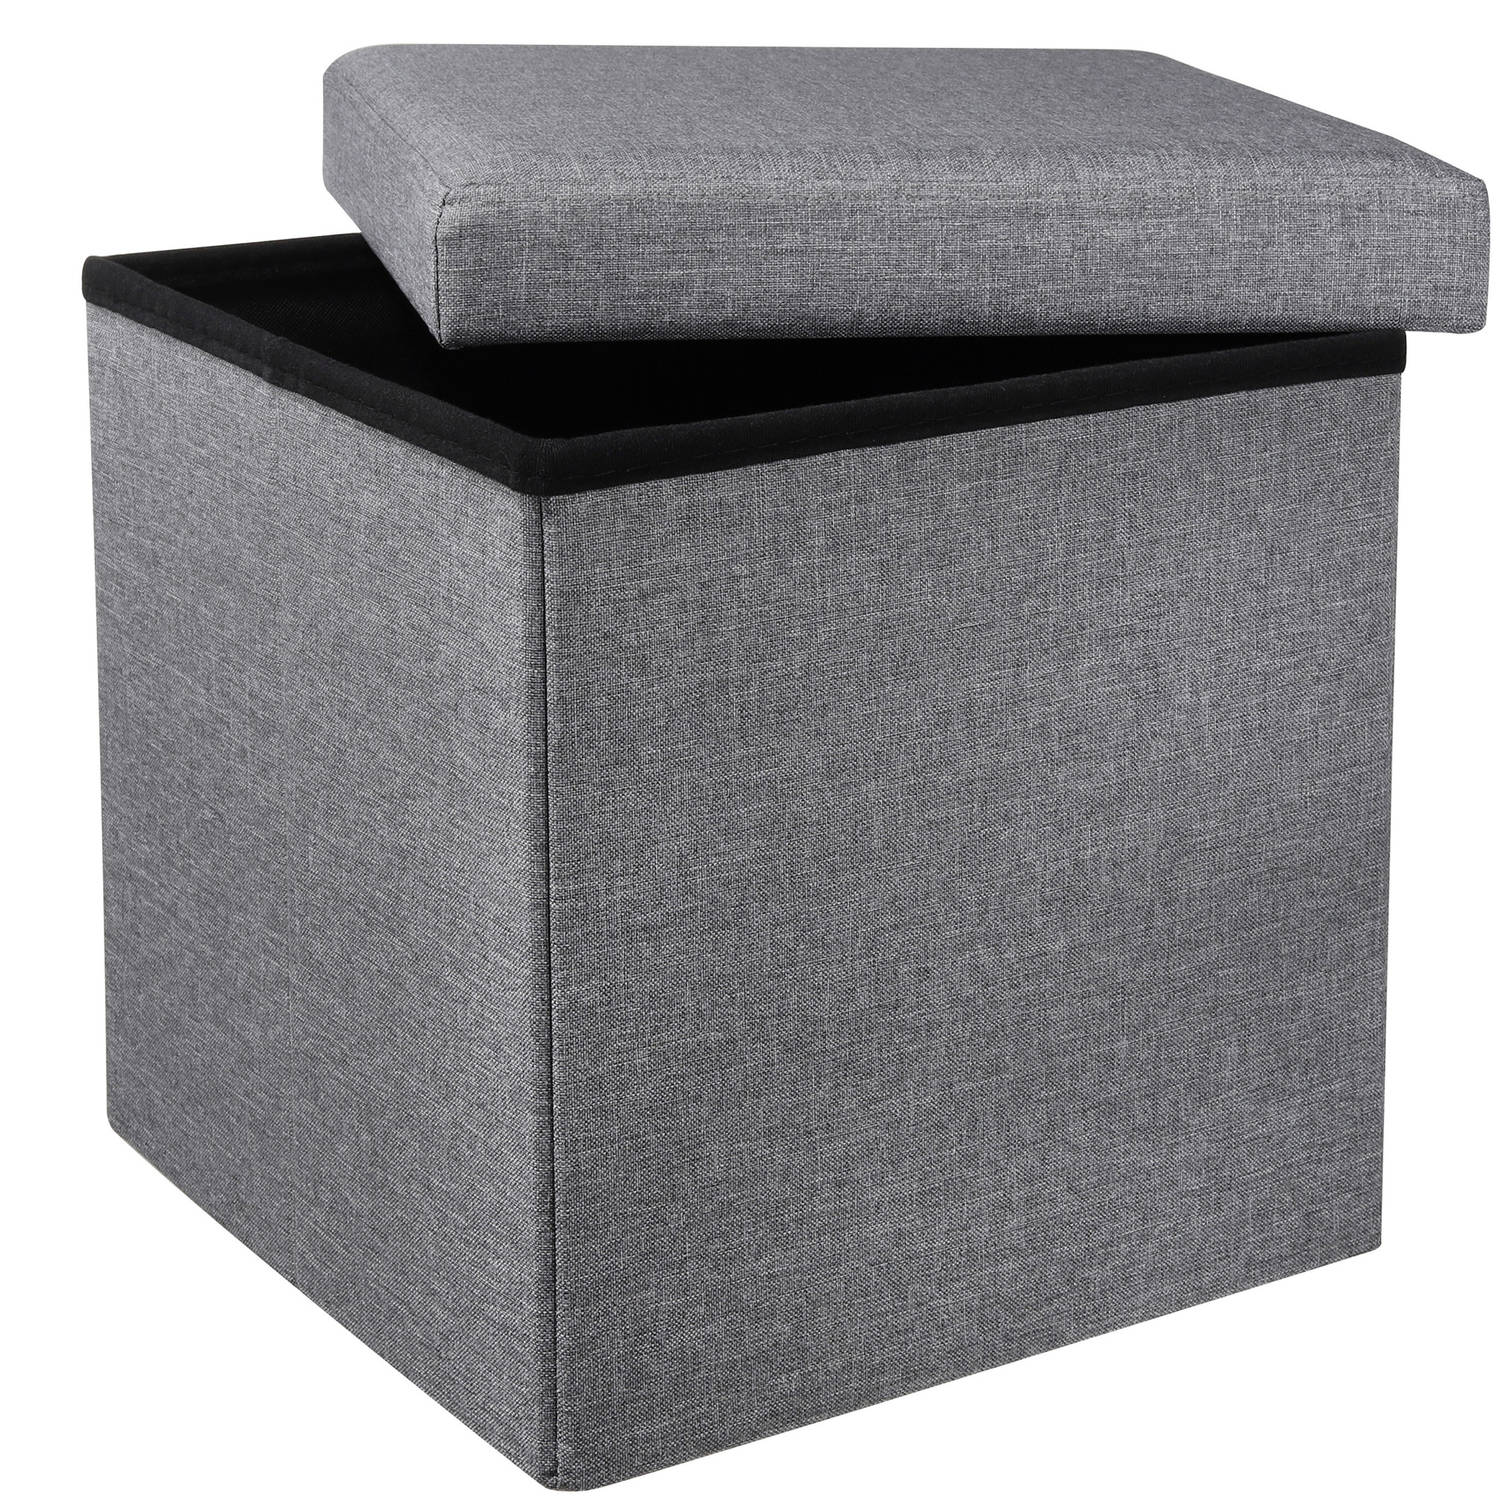 HI poef-hocker-opbergbox grijs polyester-mdf 38 x 38 cm opvouwbaar Poefs